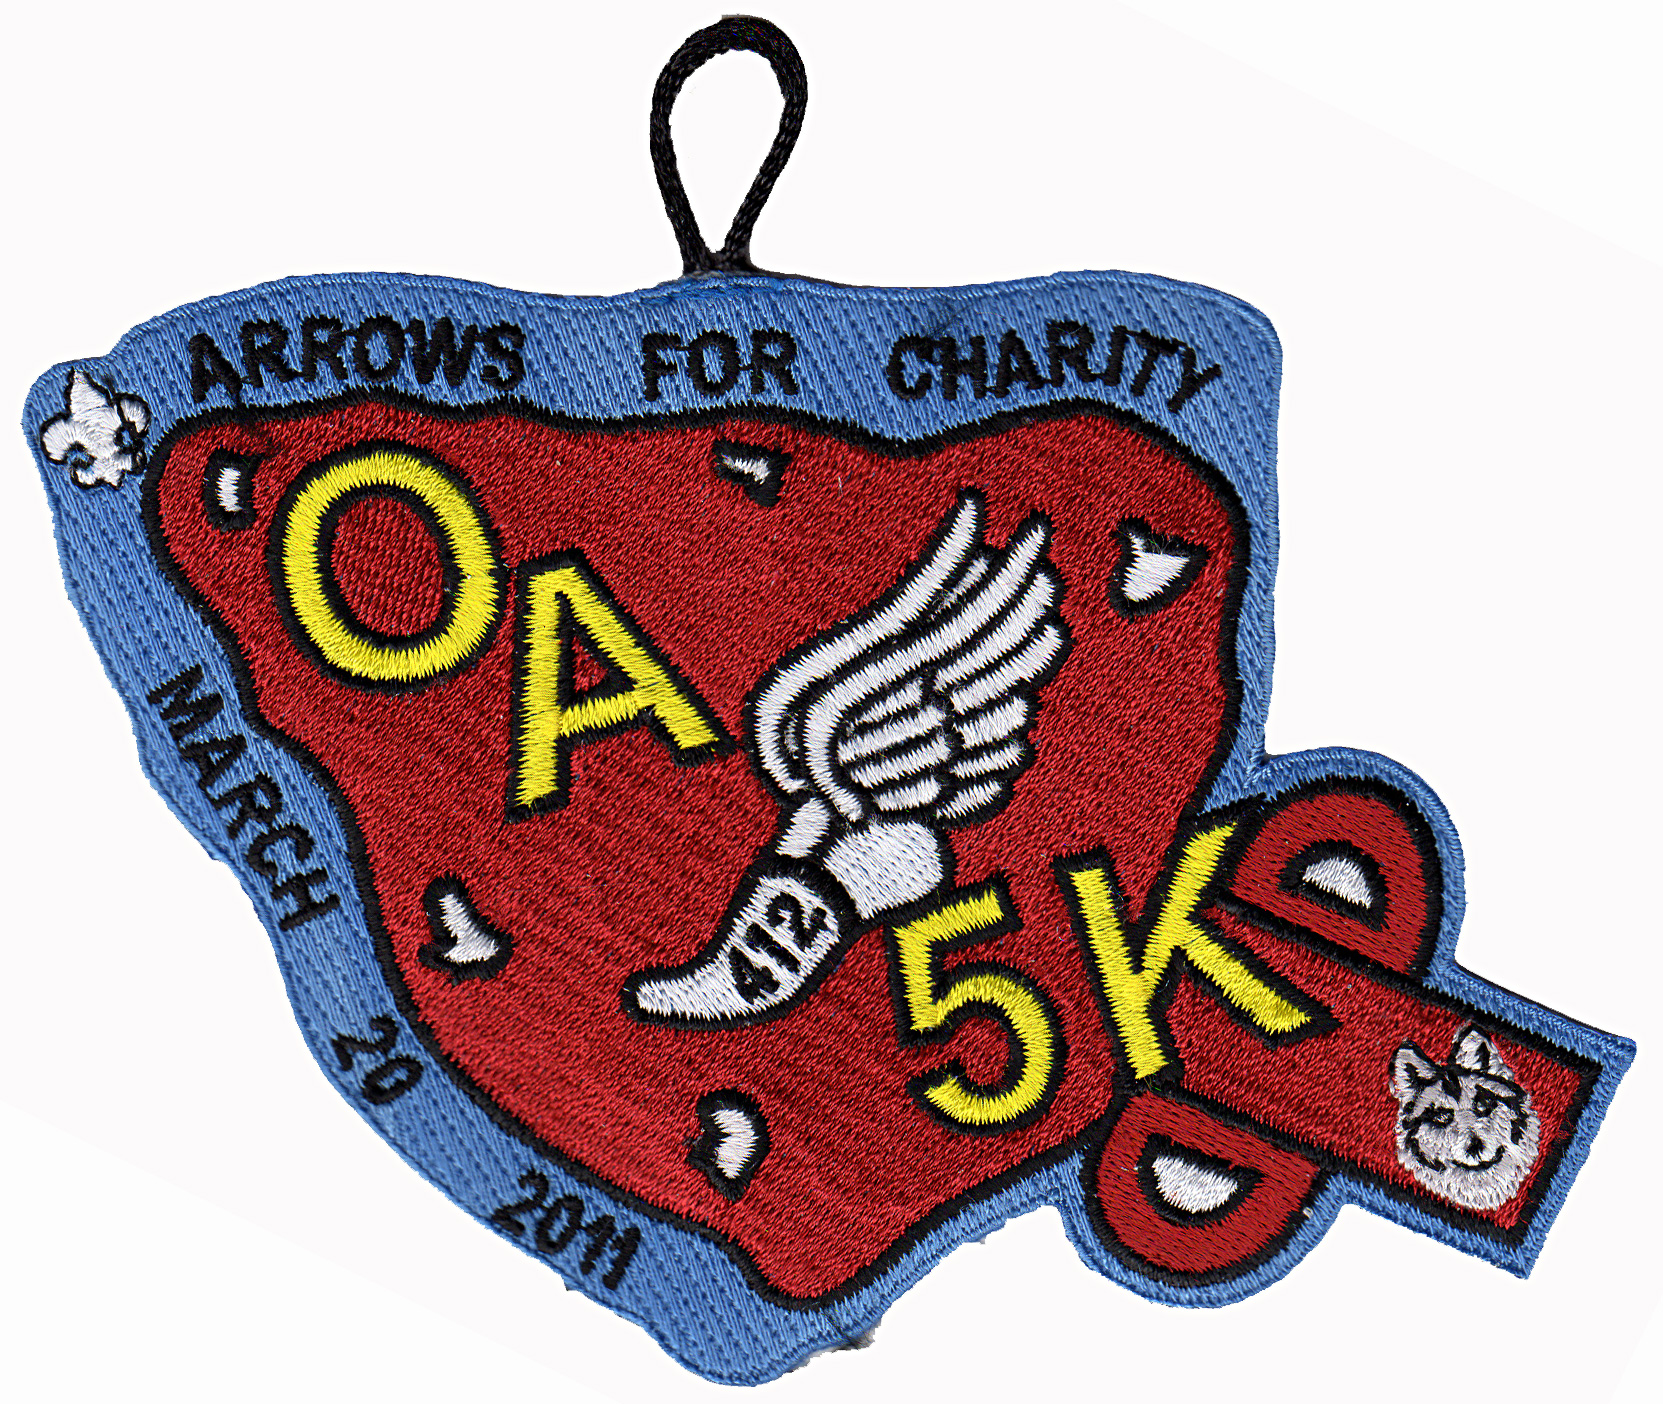 Arrows for Charity 5K Run